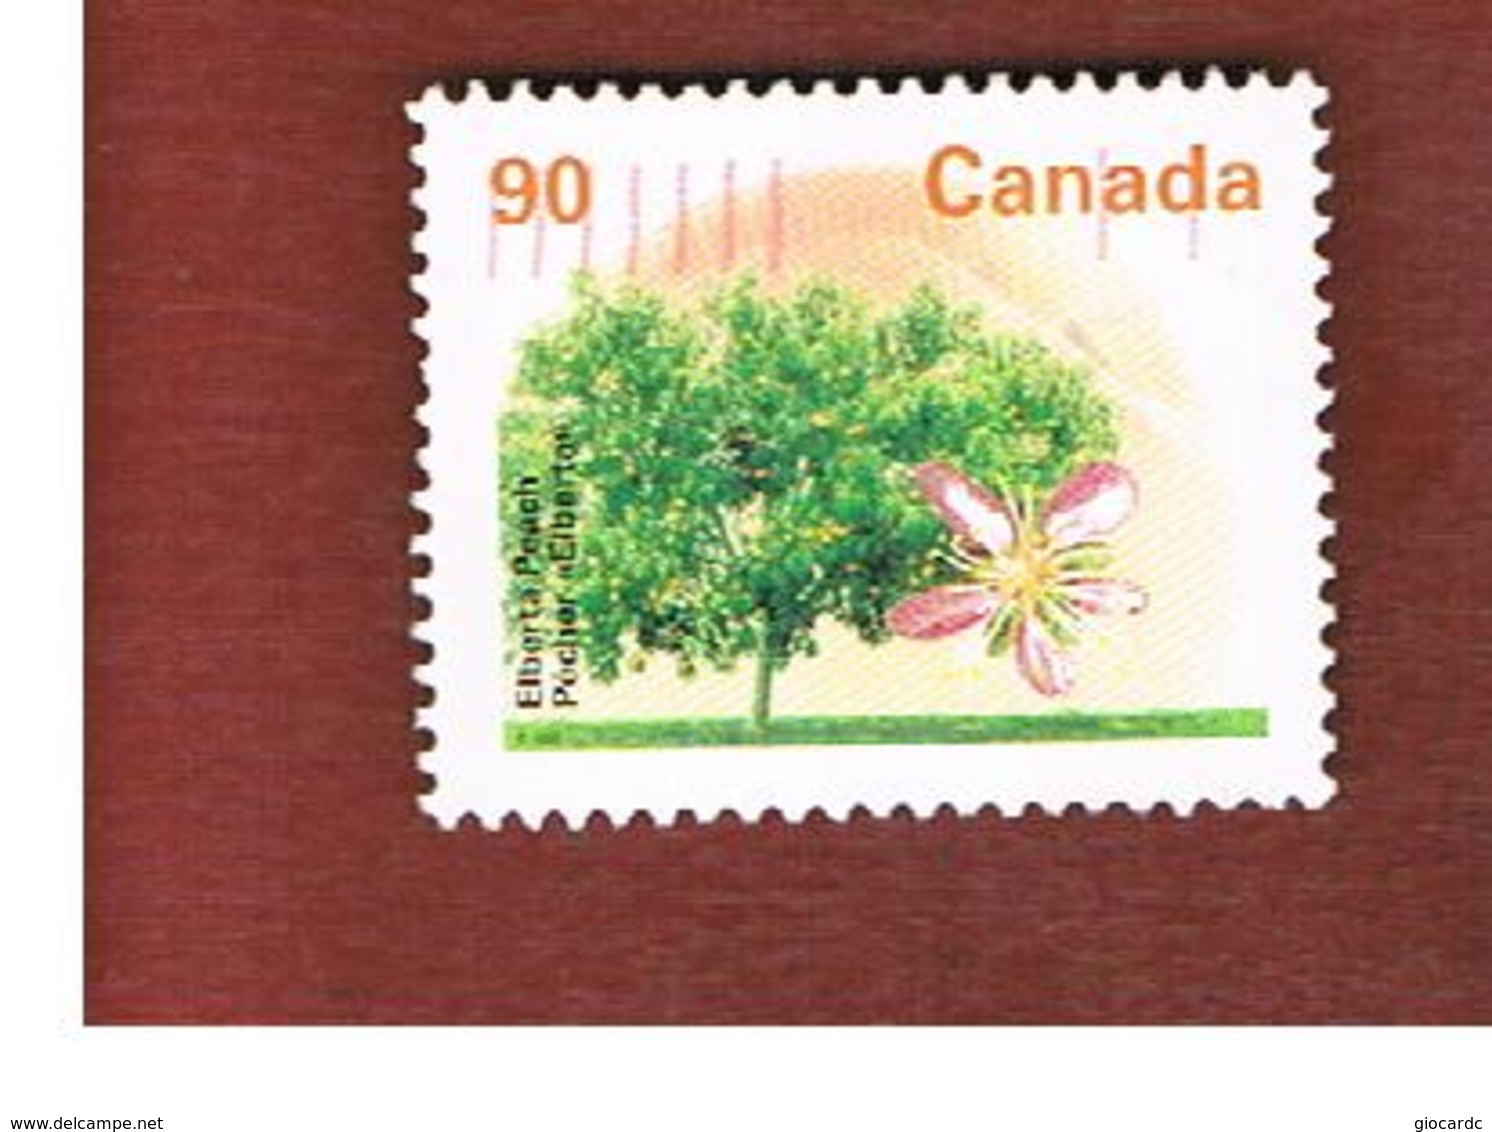 CANADA - SG 1478  - 1995 FRUIT TREES: ELBETA PEACH -  USED - Oblitérés